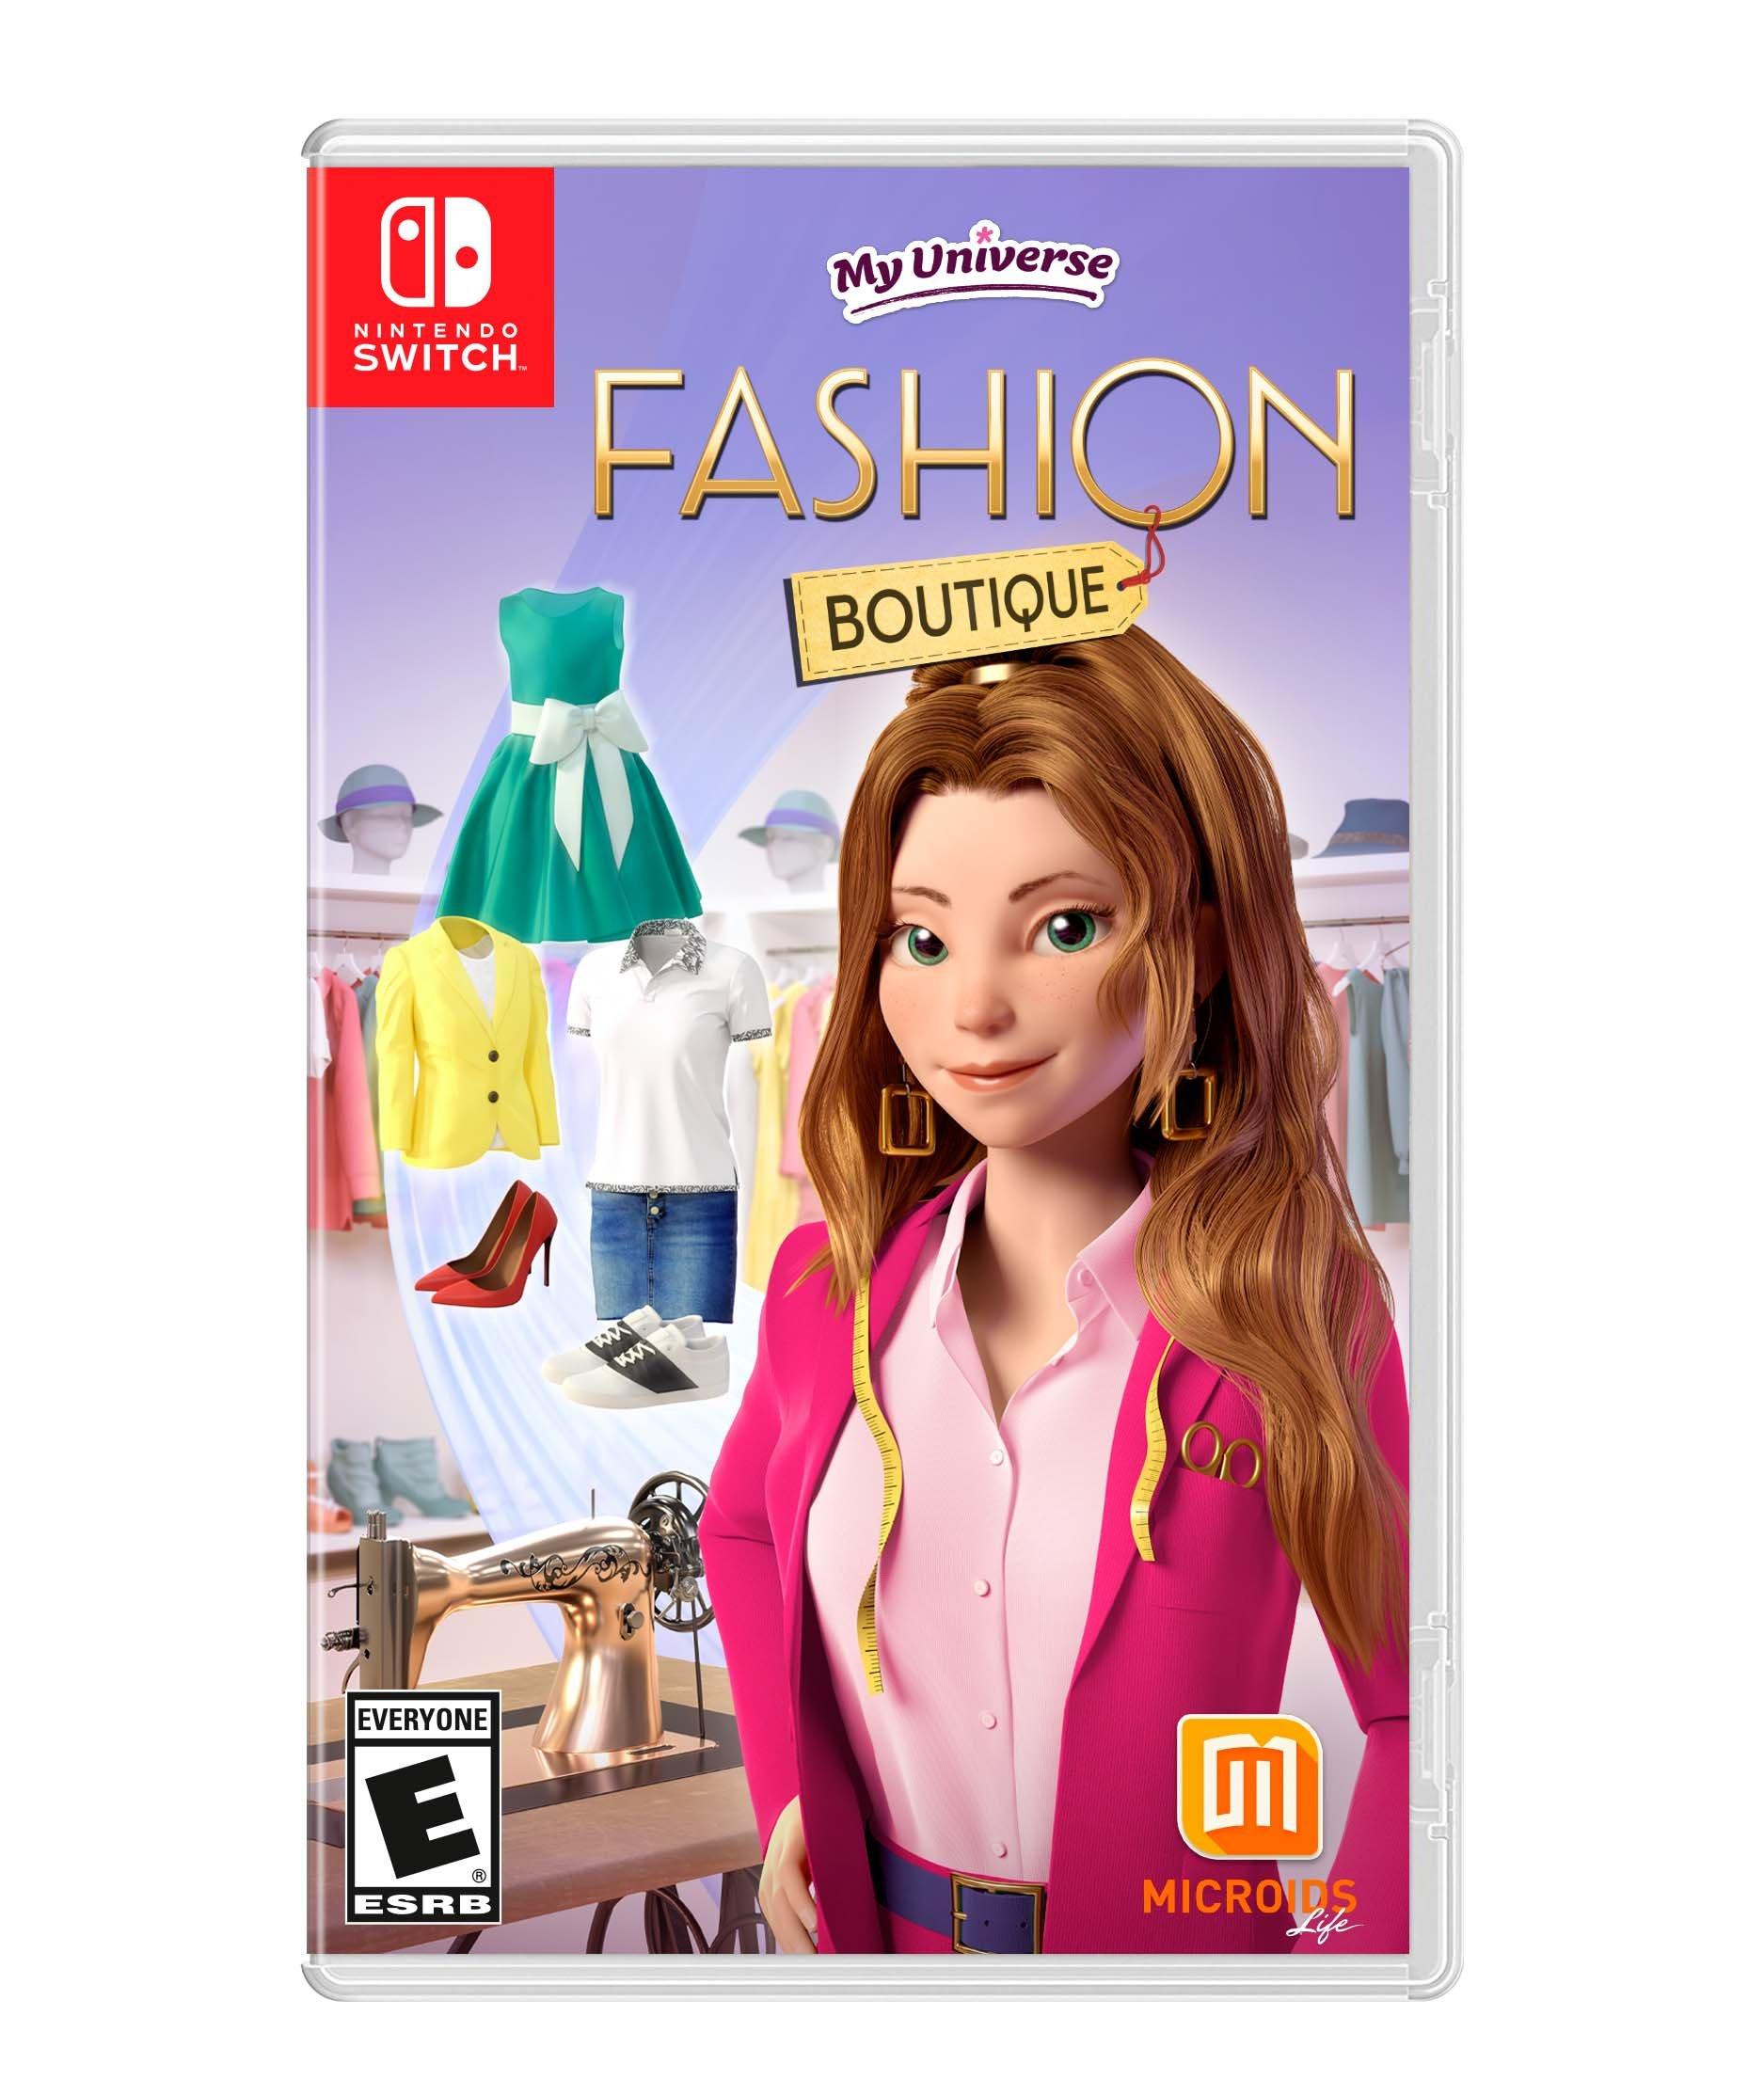 My Universe: Fashion Boutique - Nintendo Switch, Microids